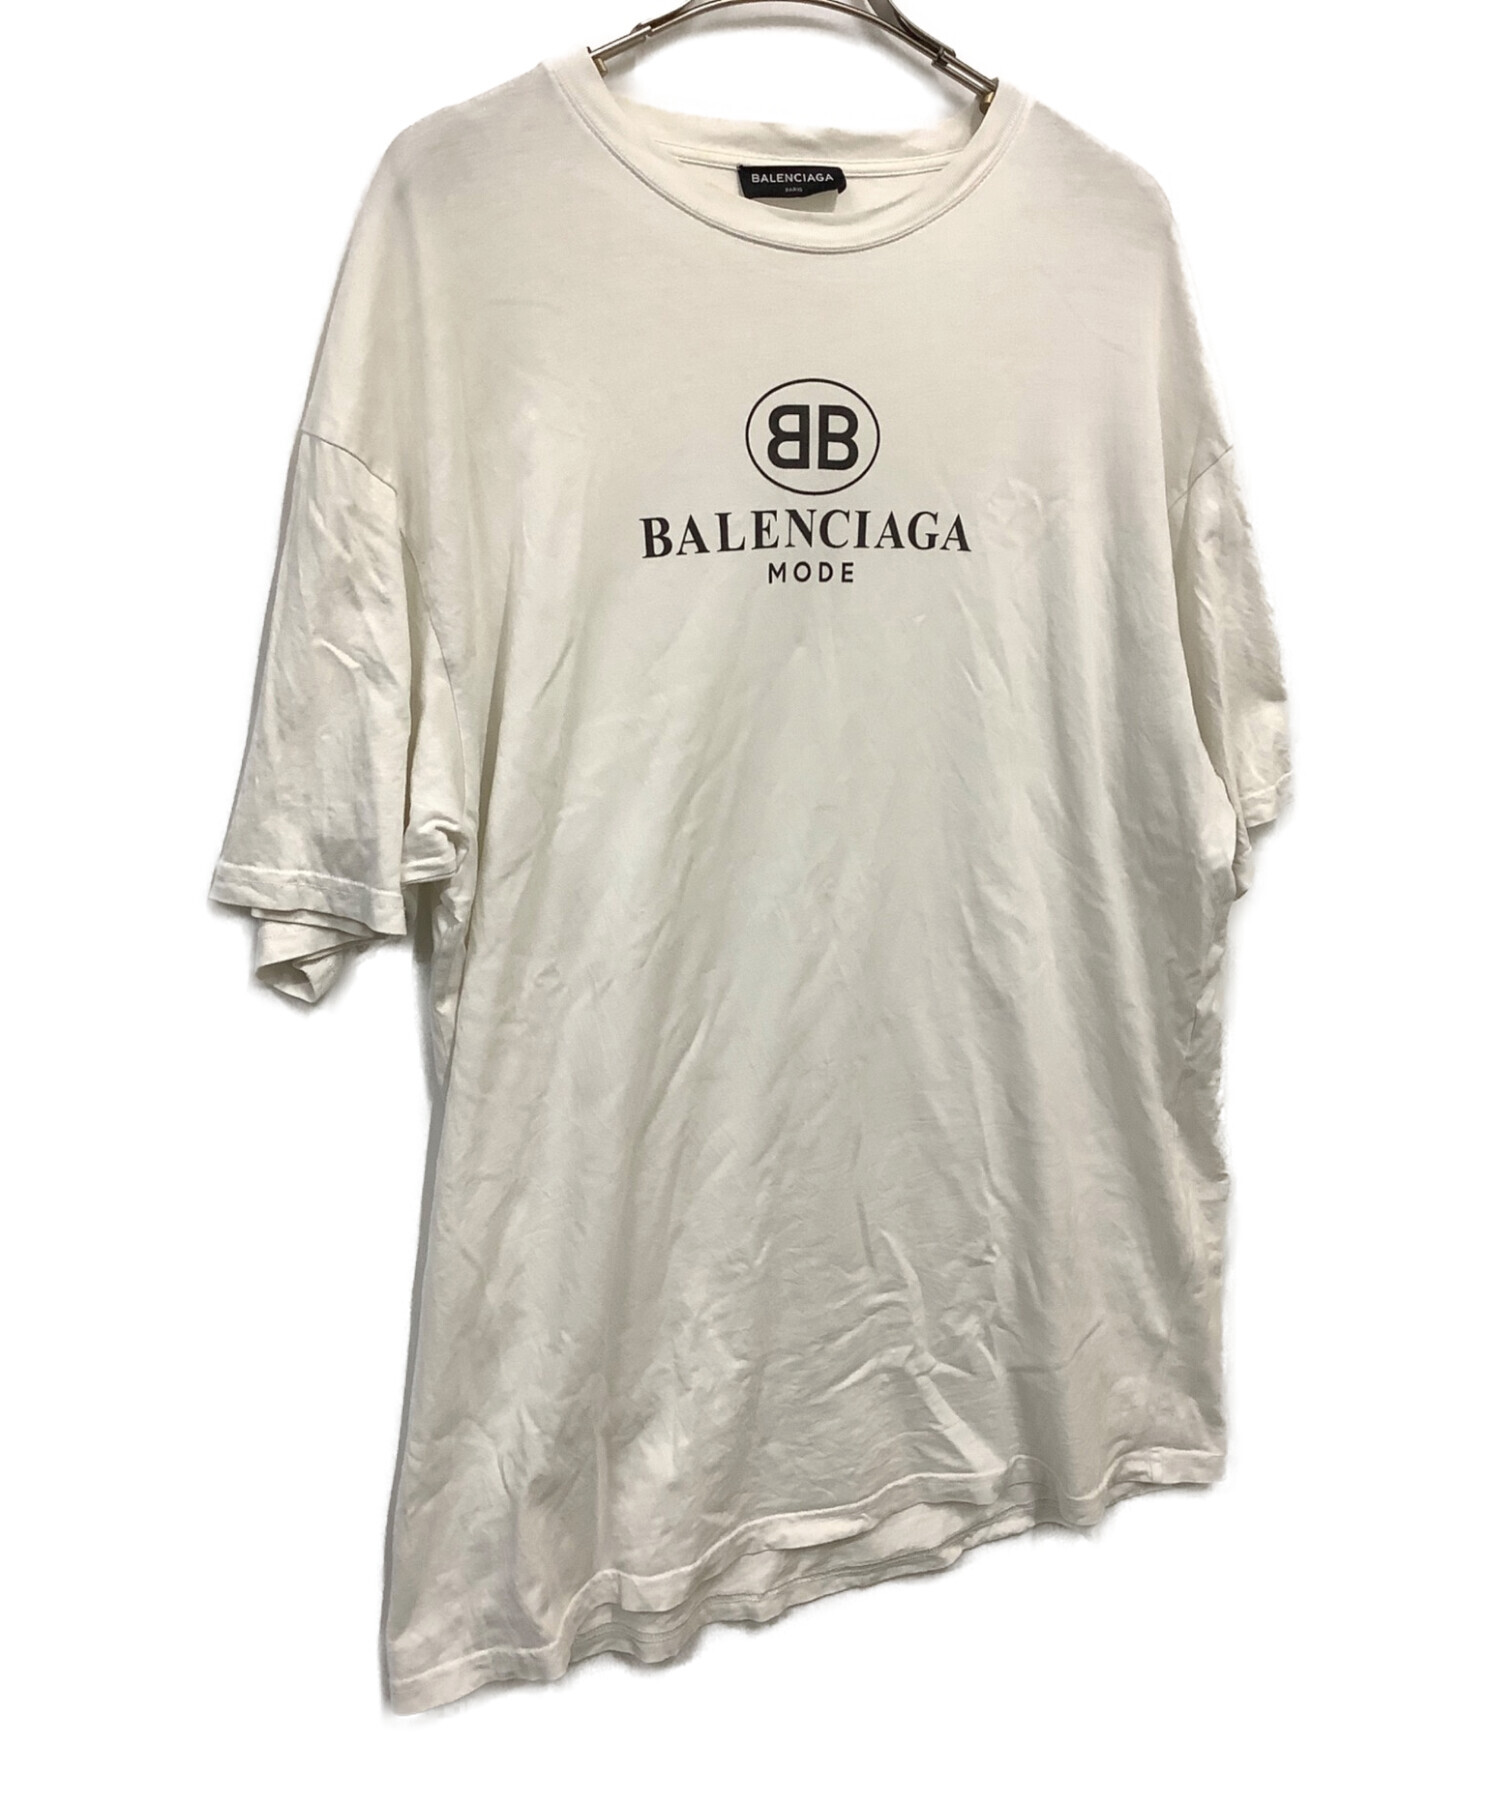 Balenciaga BB MODE Tシャツ ブラック Mサイズ